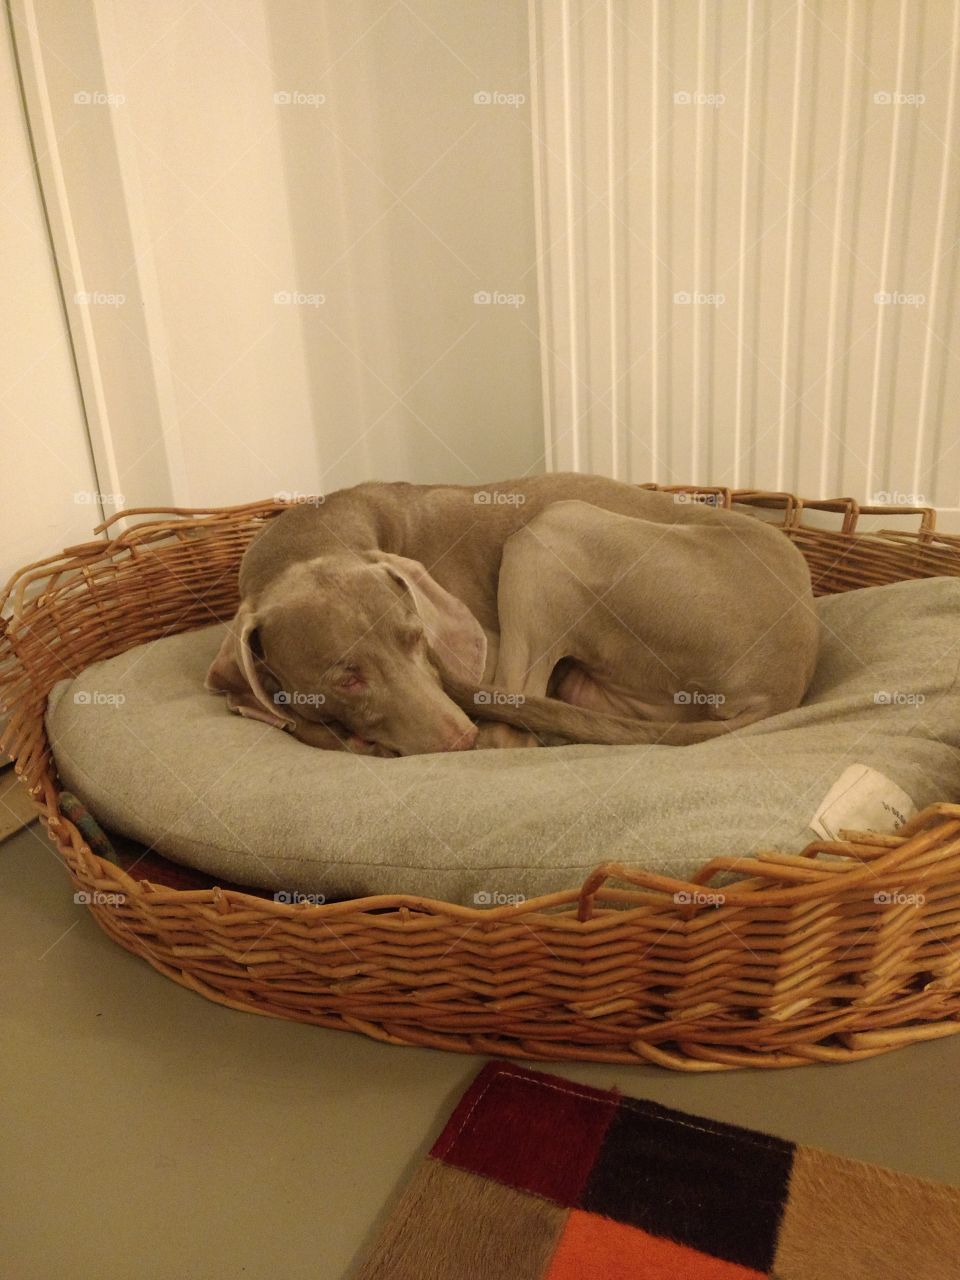 Weimaraner dog sleeping in basket.